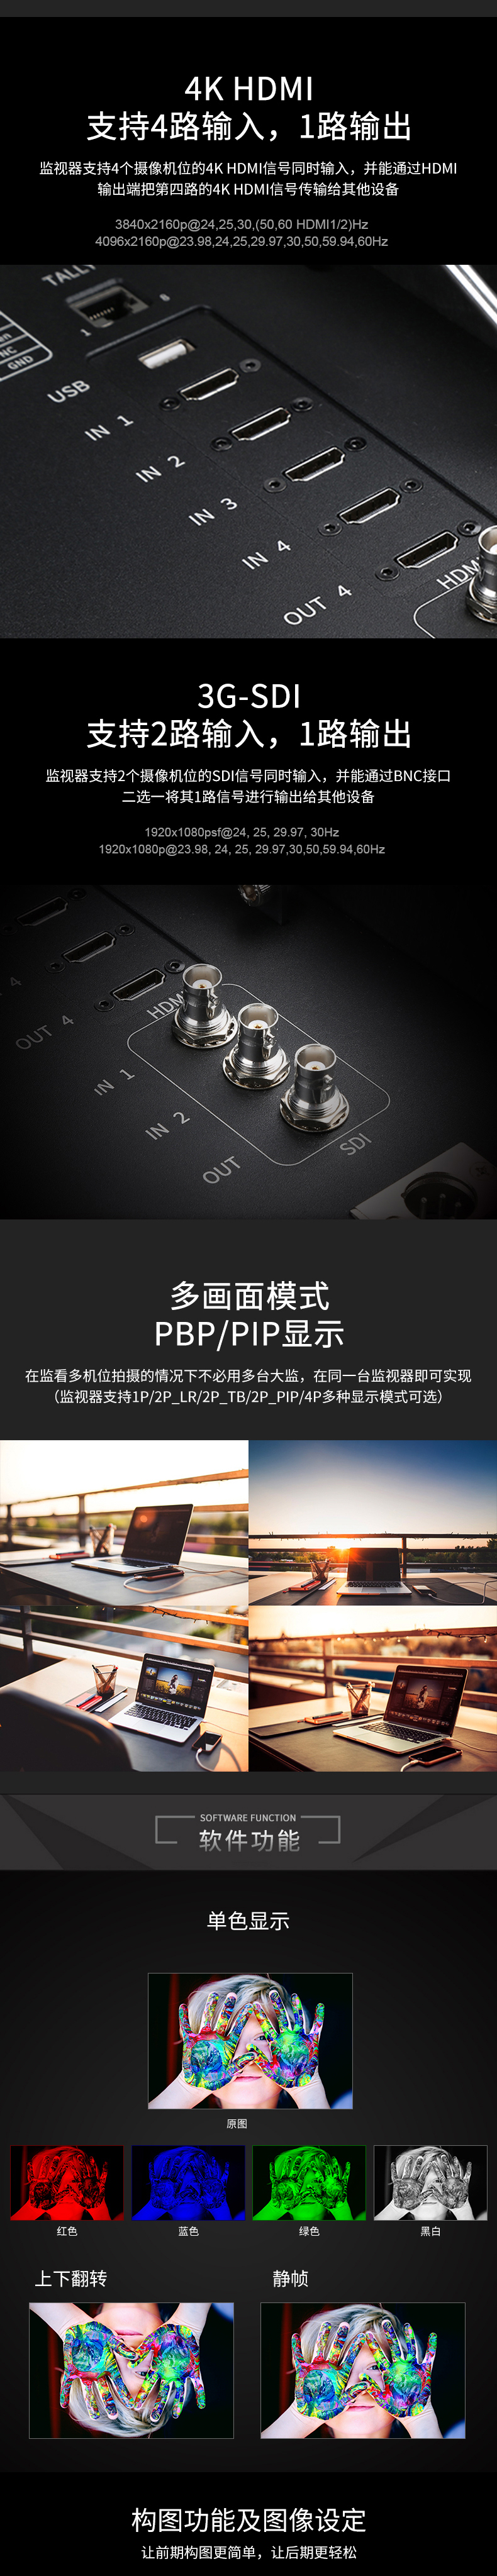 SP17-HDR_箱载式便携导演监视器